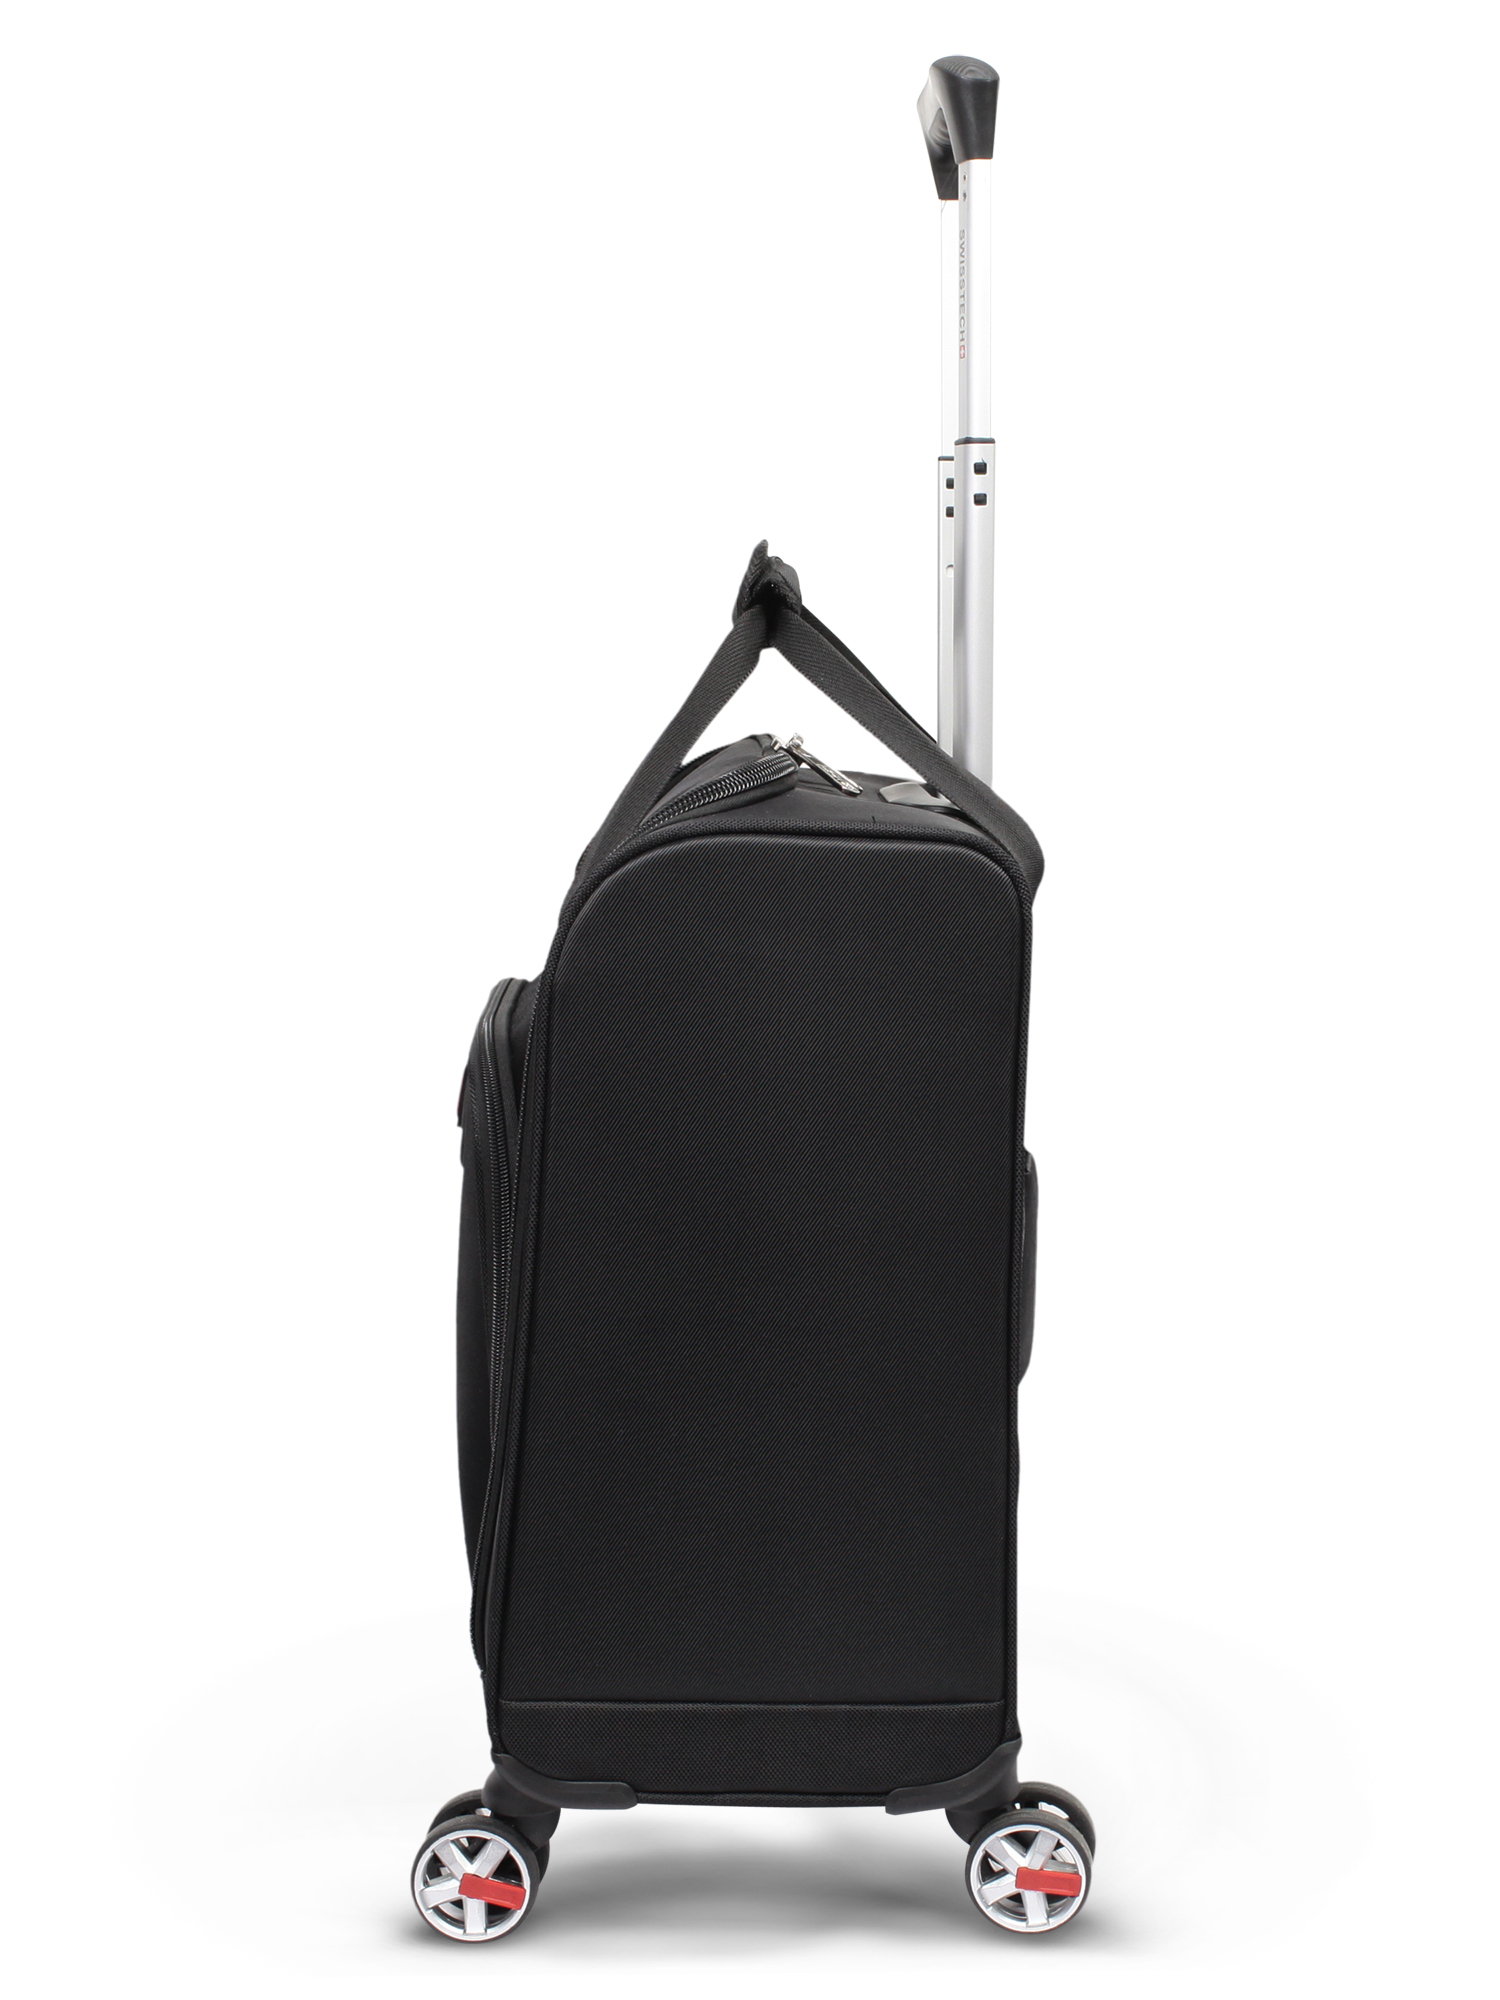 SwissTech Executive 16.5" Carry-on Luggage, 8-Wheel Underseater, Black (Walmart Exclusive) - image 2 of 9